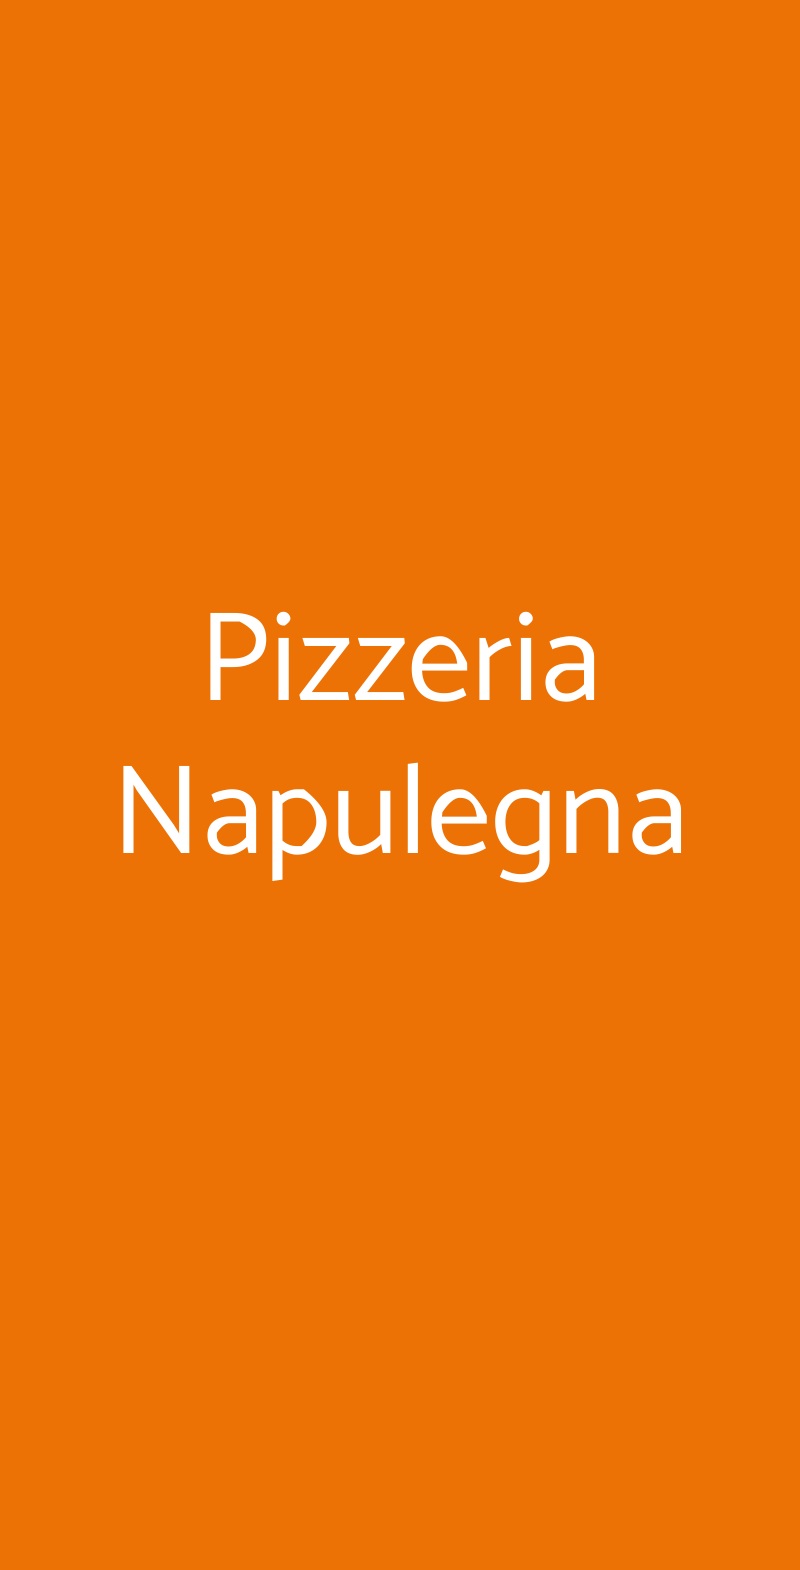 Pizzeria Napulegna Milano menù 1 pagina